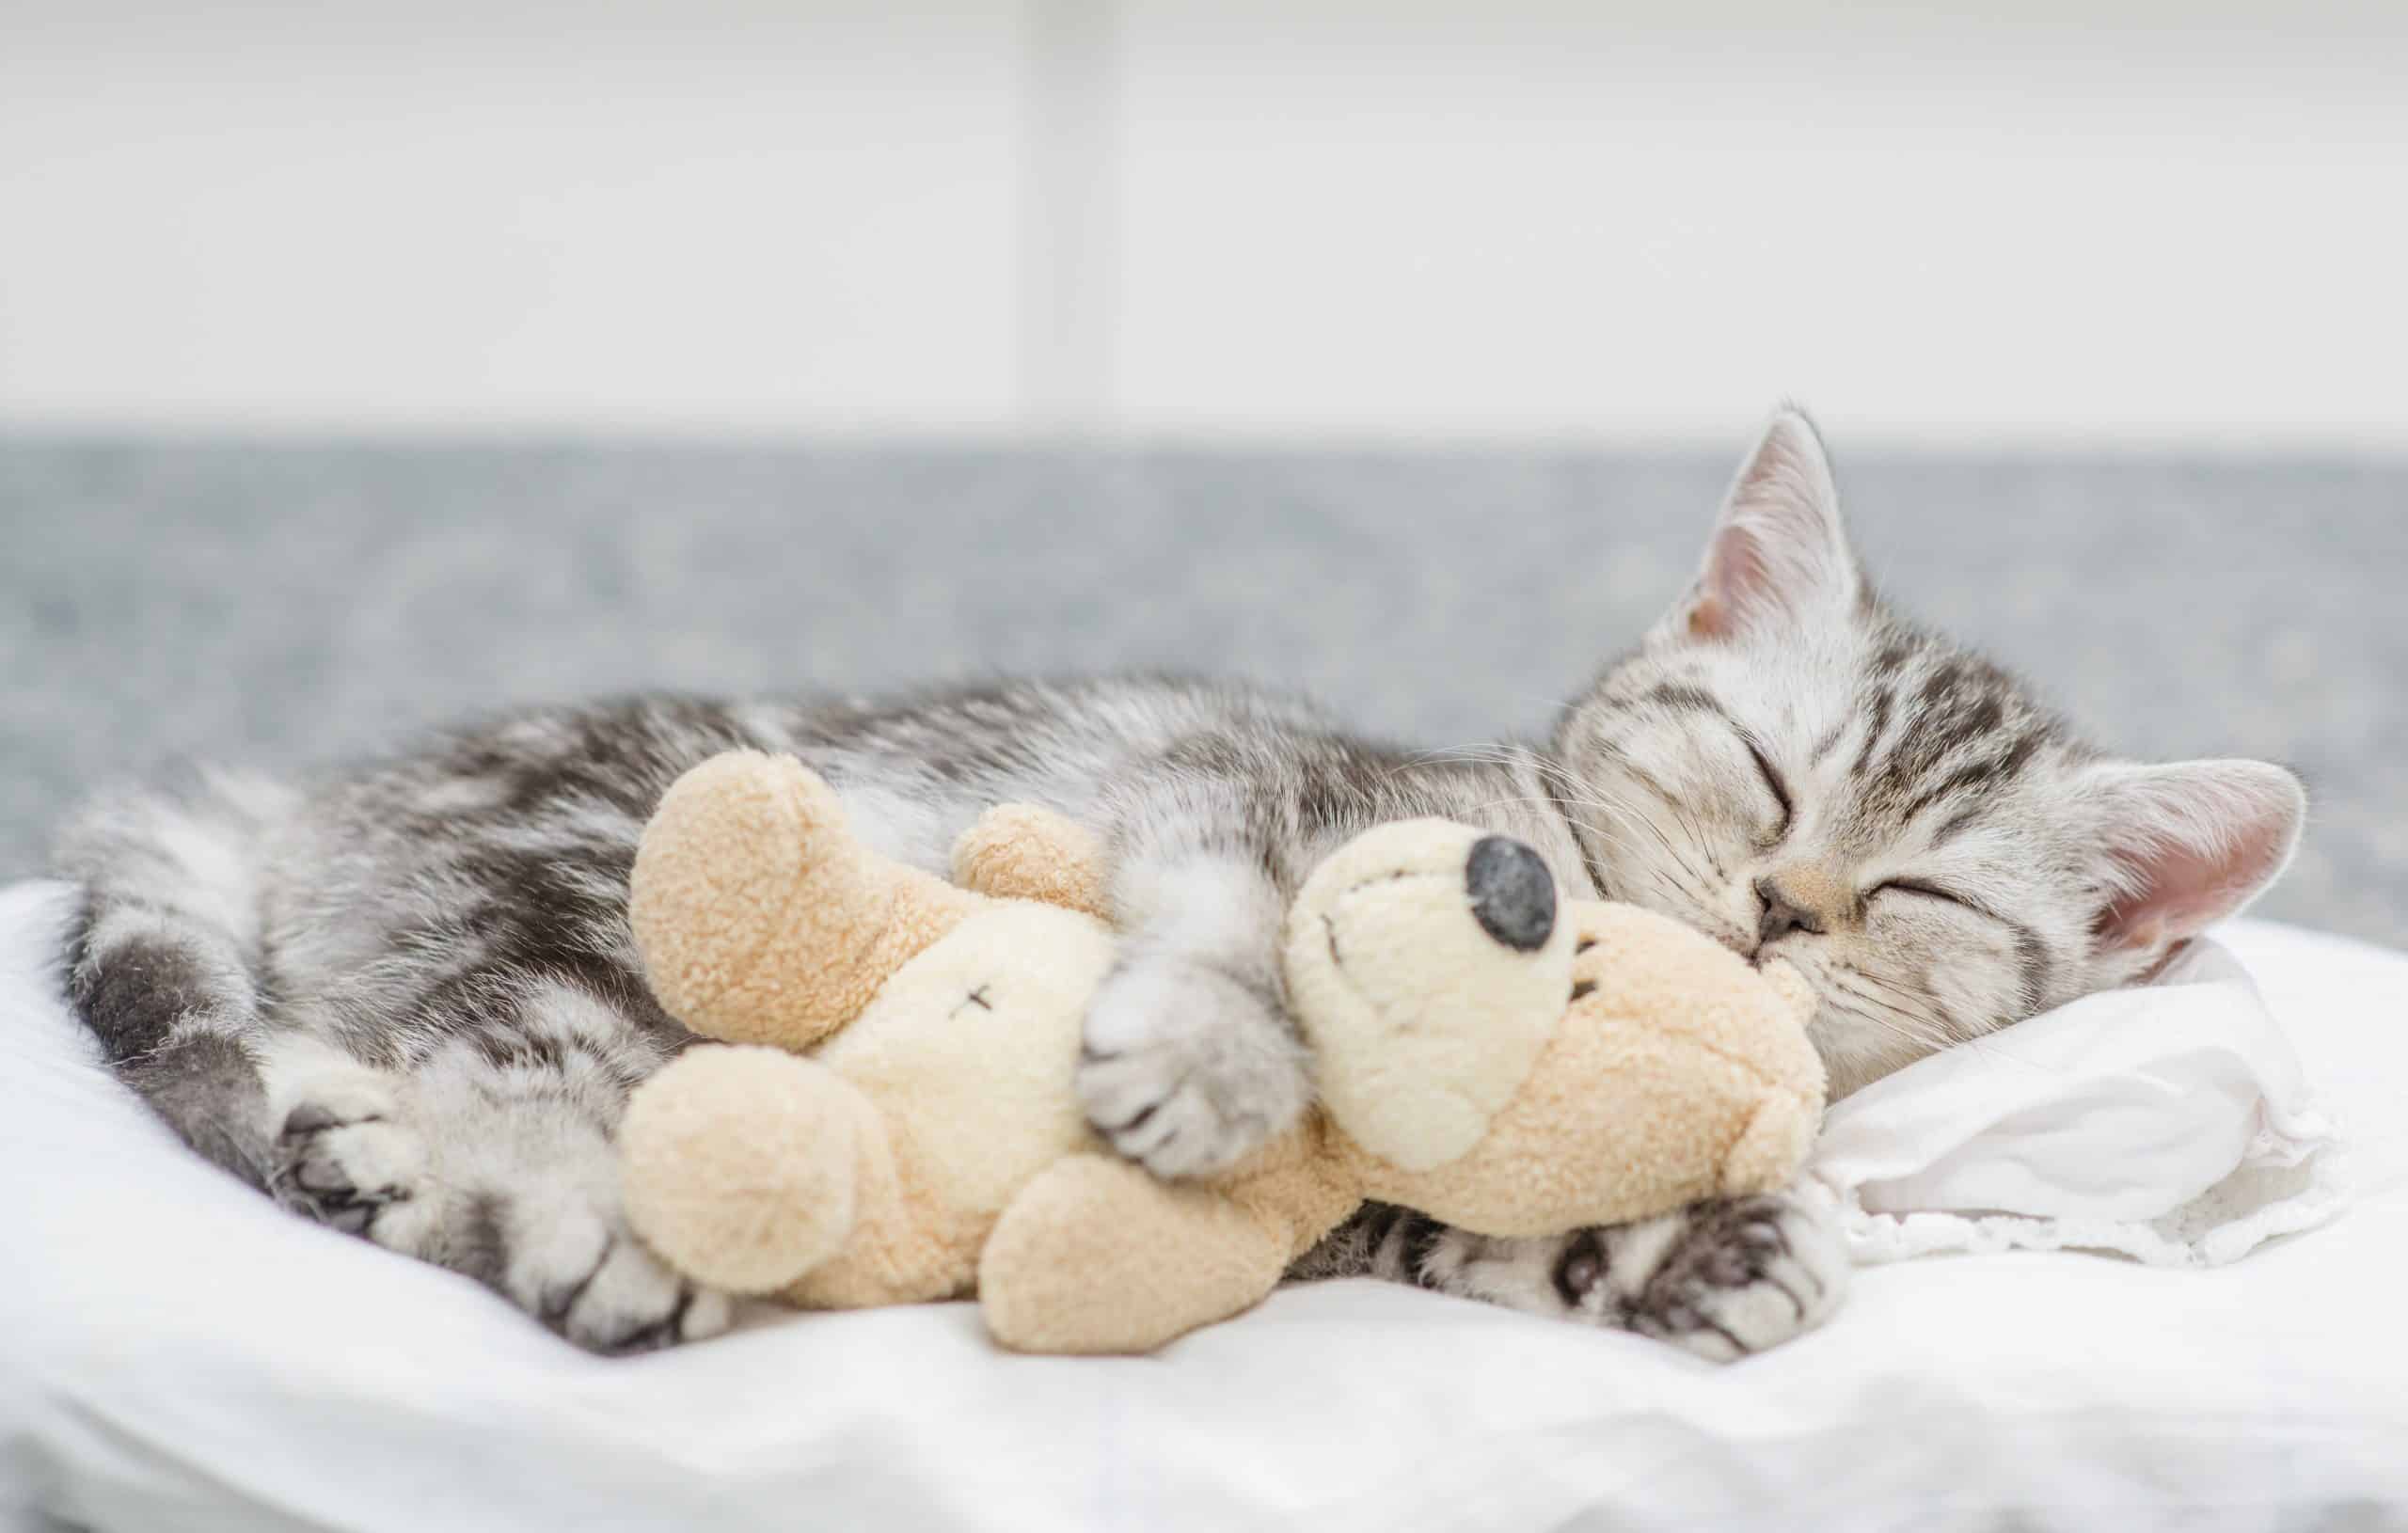 Cute baby kitten sleeping with toy bear.